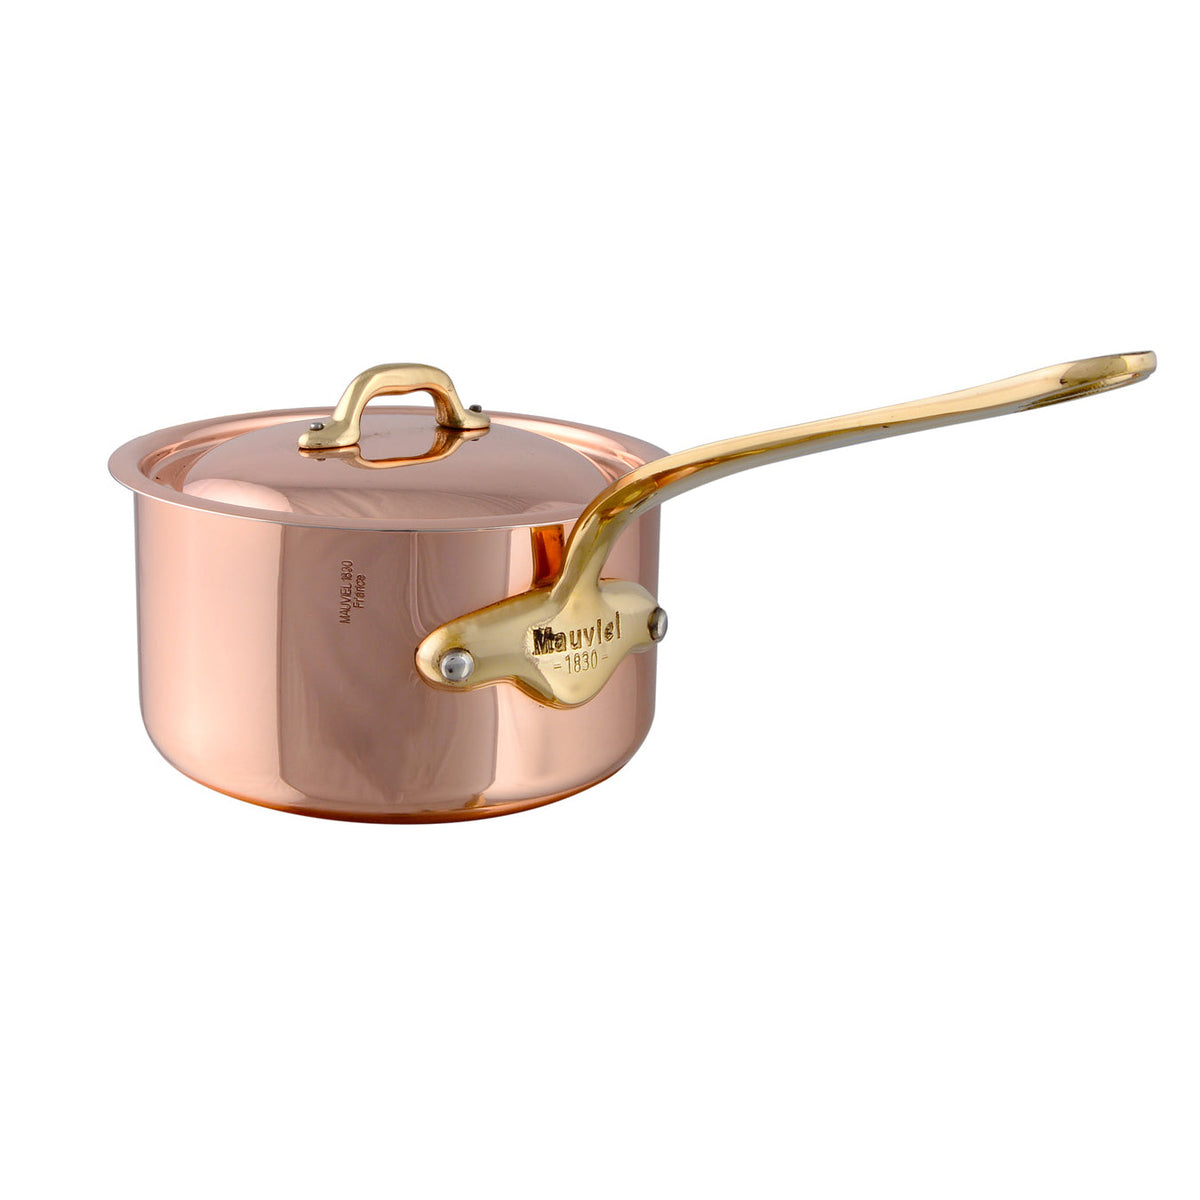 Mauviel Cookware: Pans, Copper Cookware & 1830